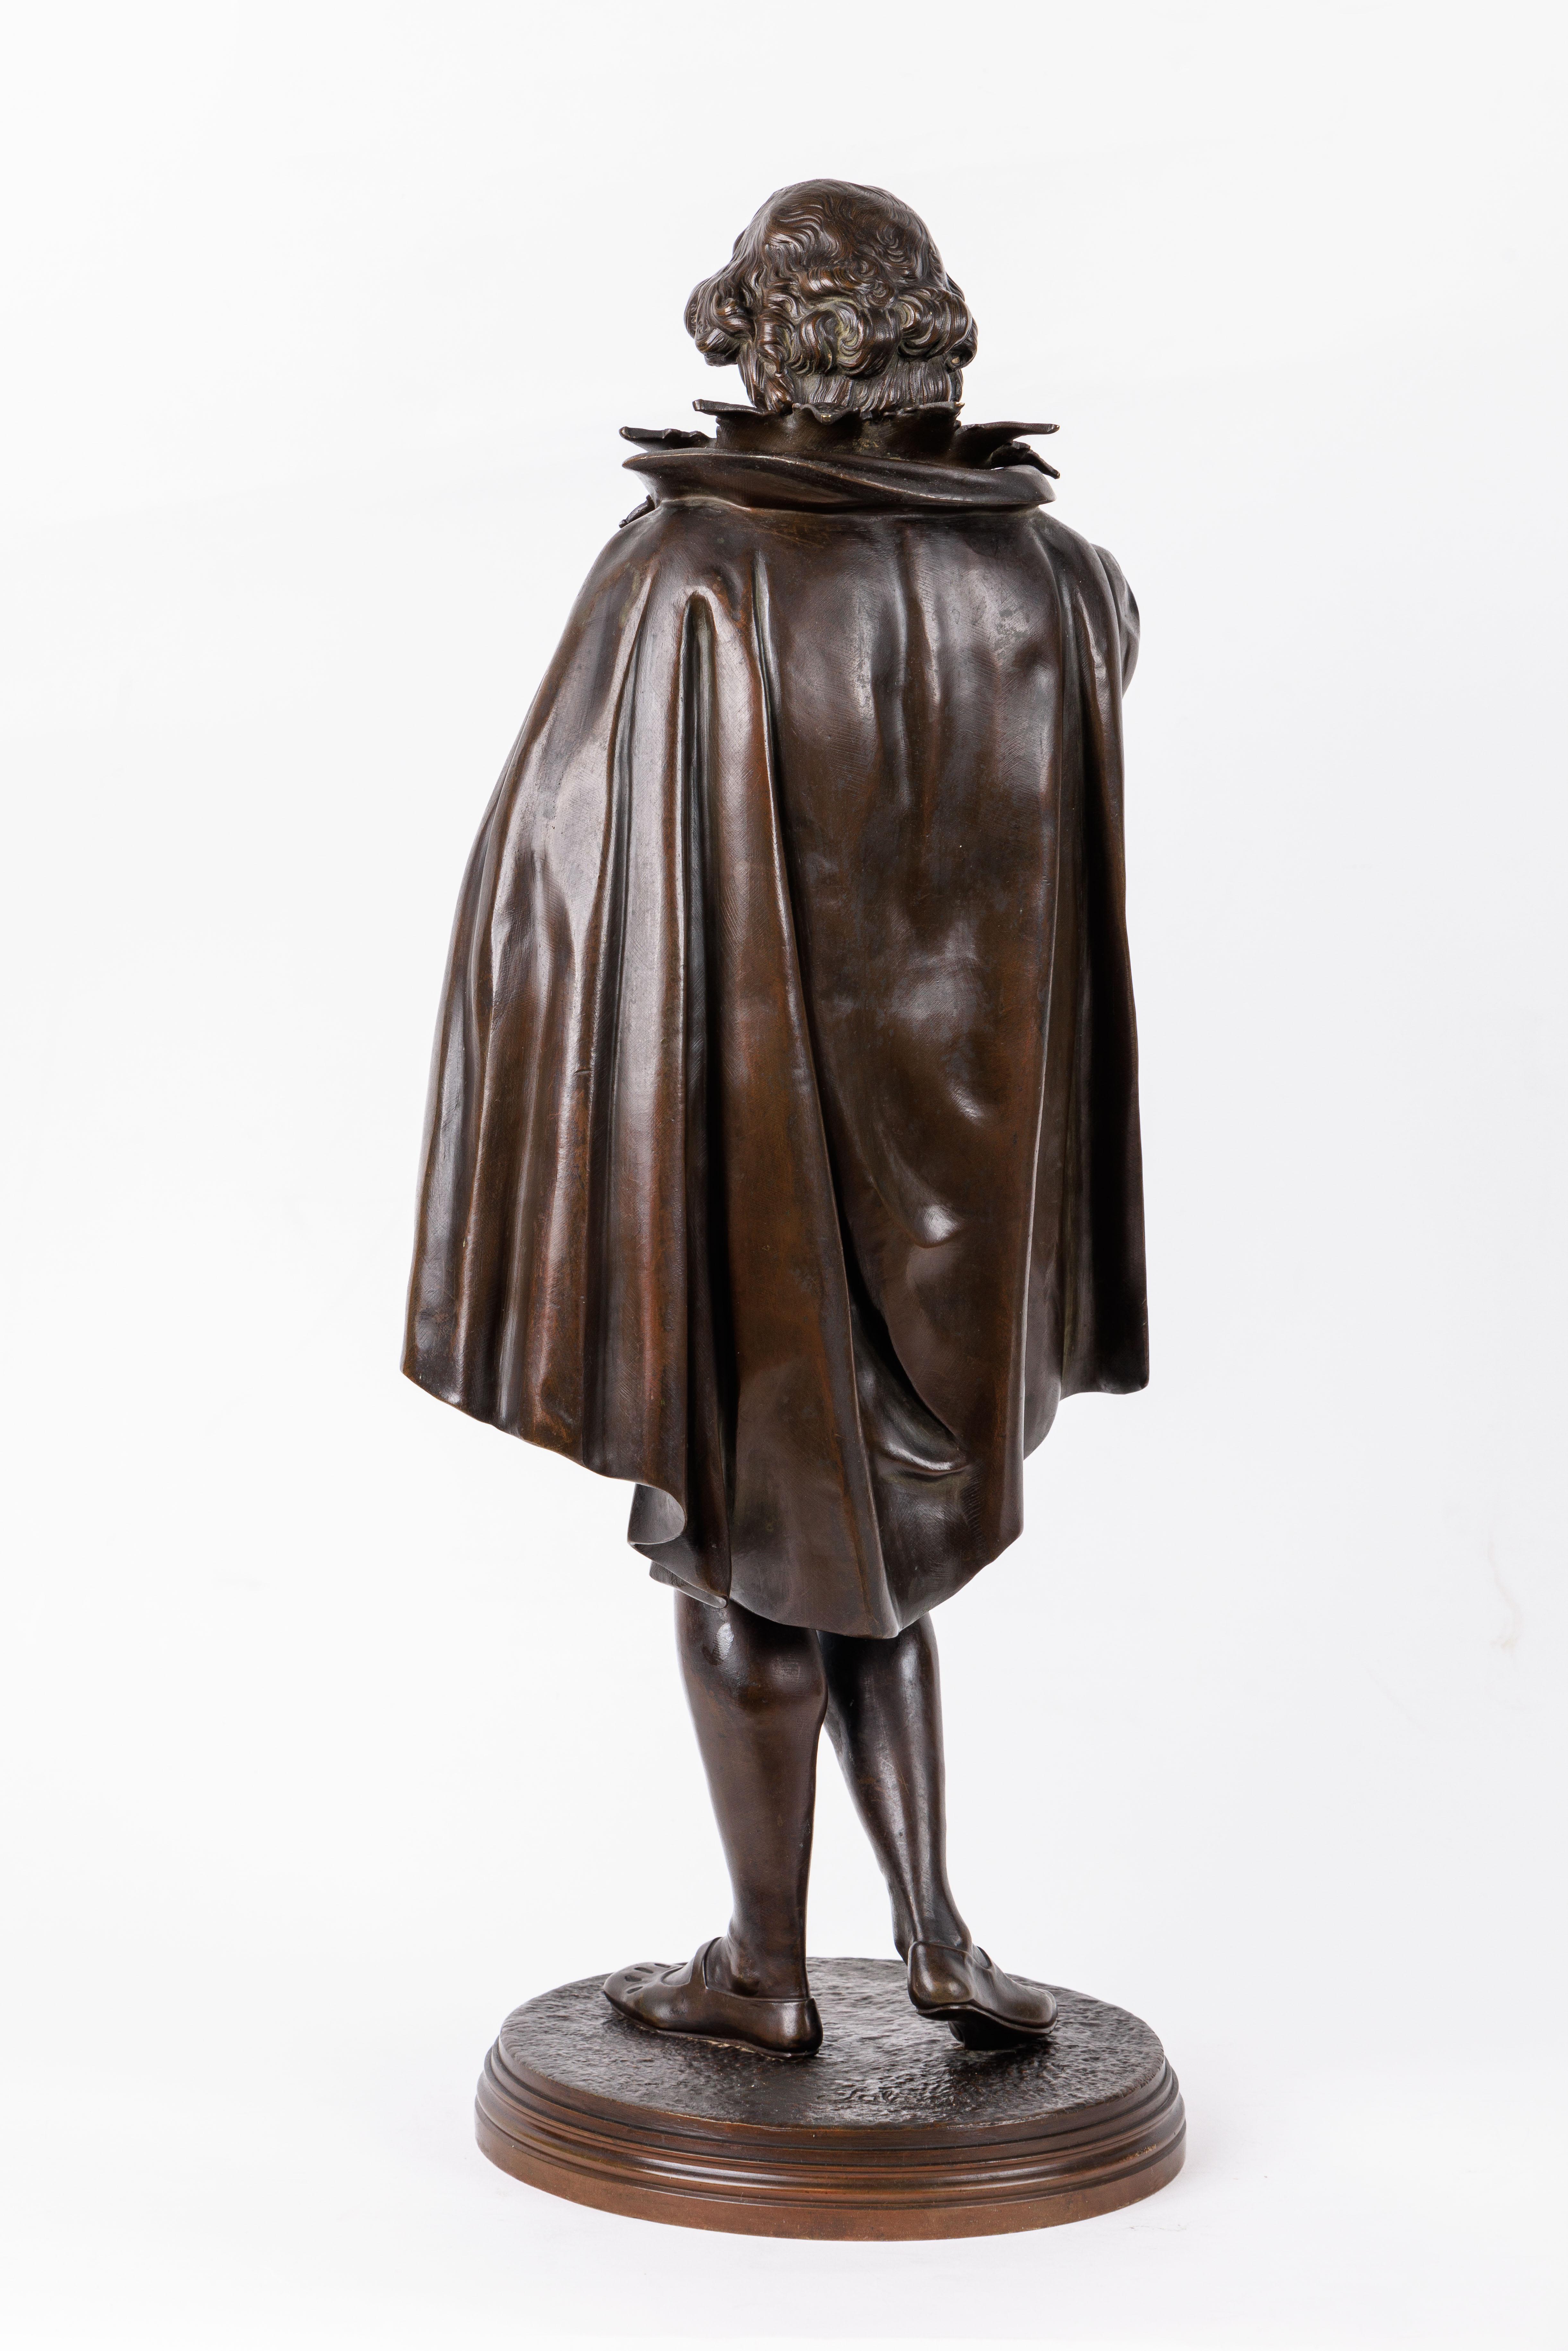 Jean Jules B. Salmson, A Patinated Bronze Sculpture of William Shakespeare 1